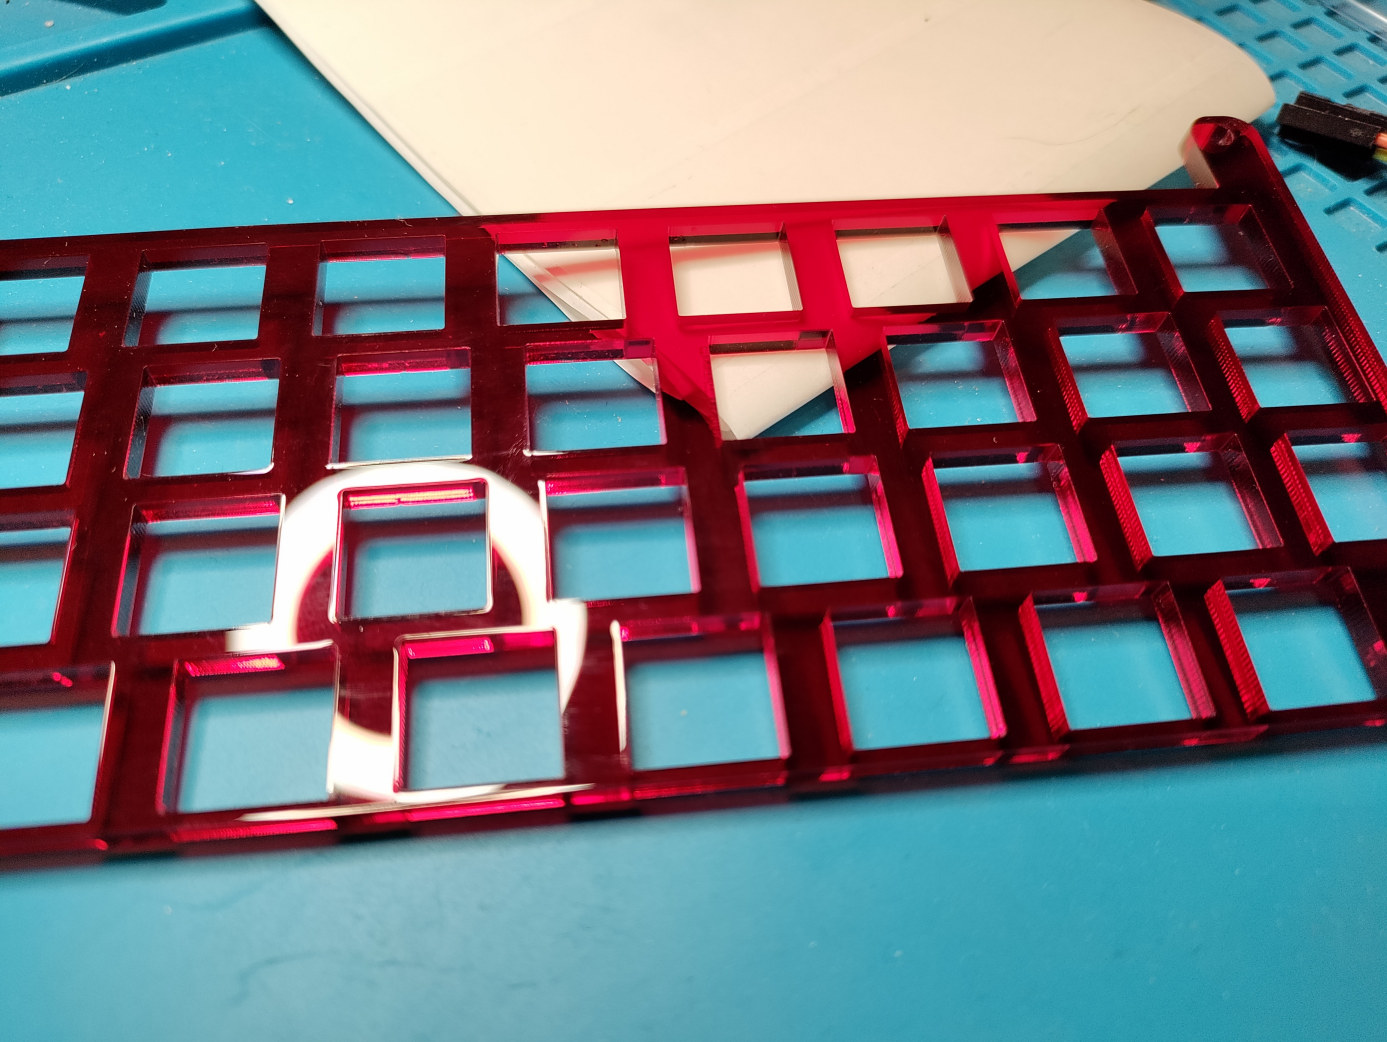 Laser cut keyboard frame